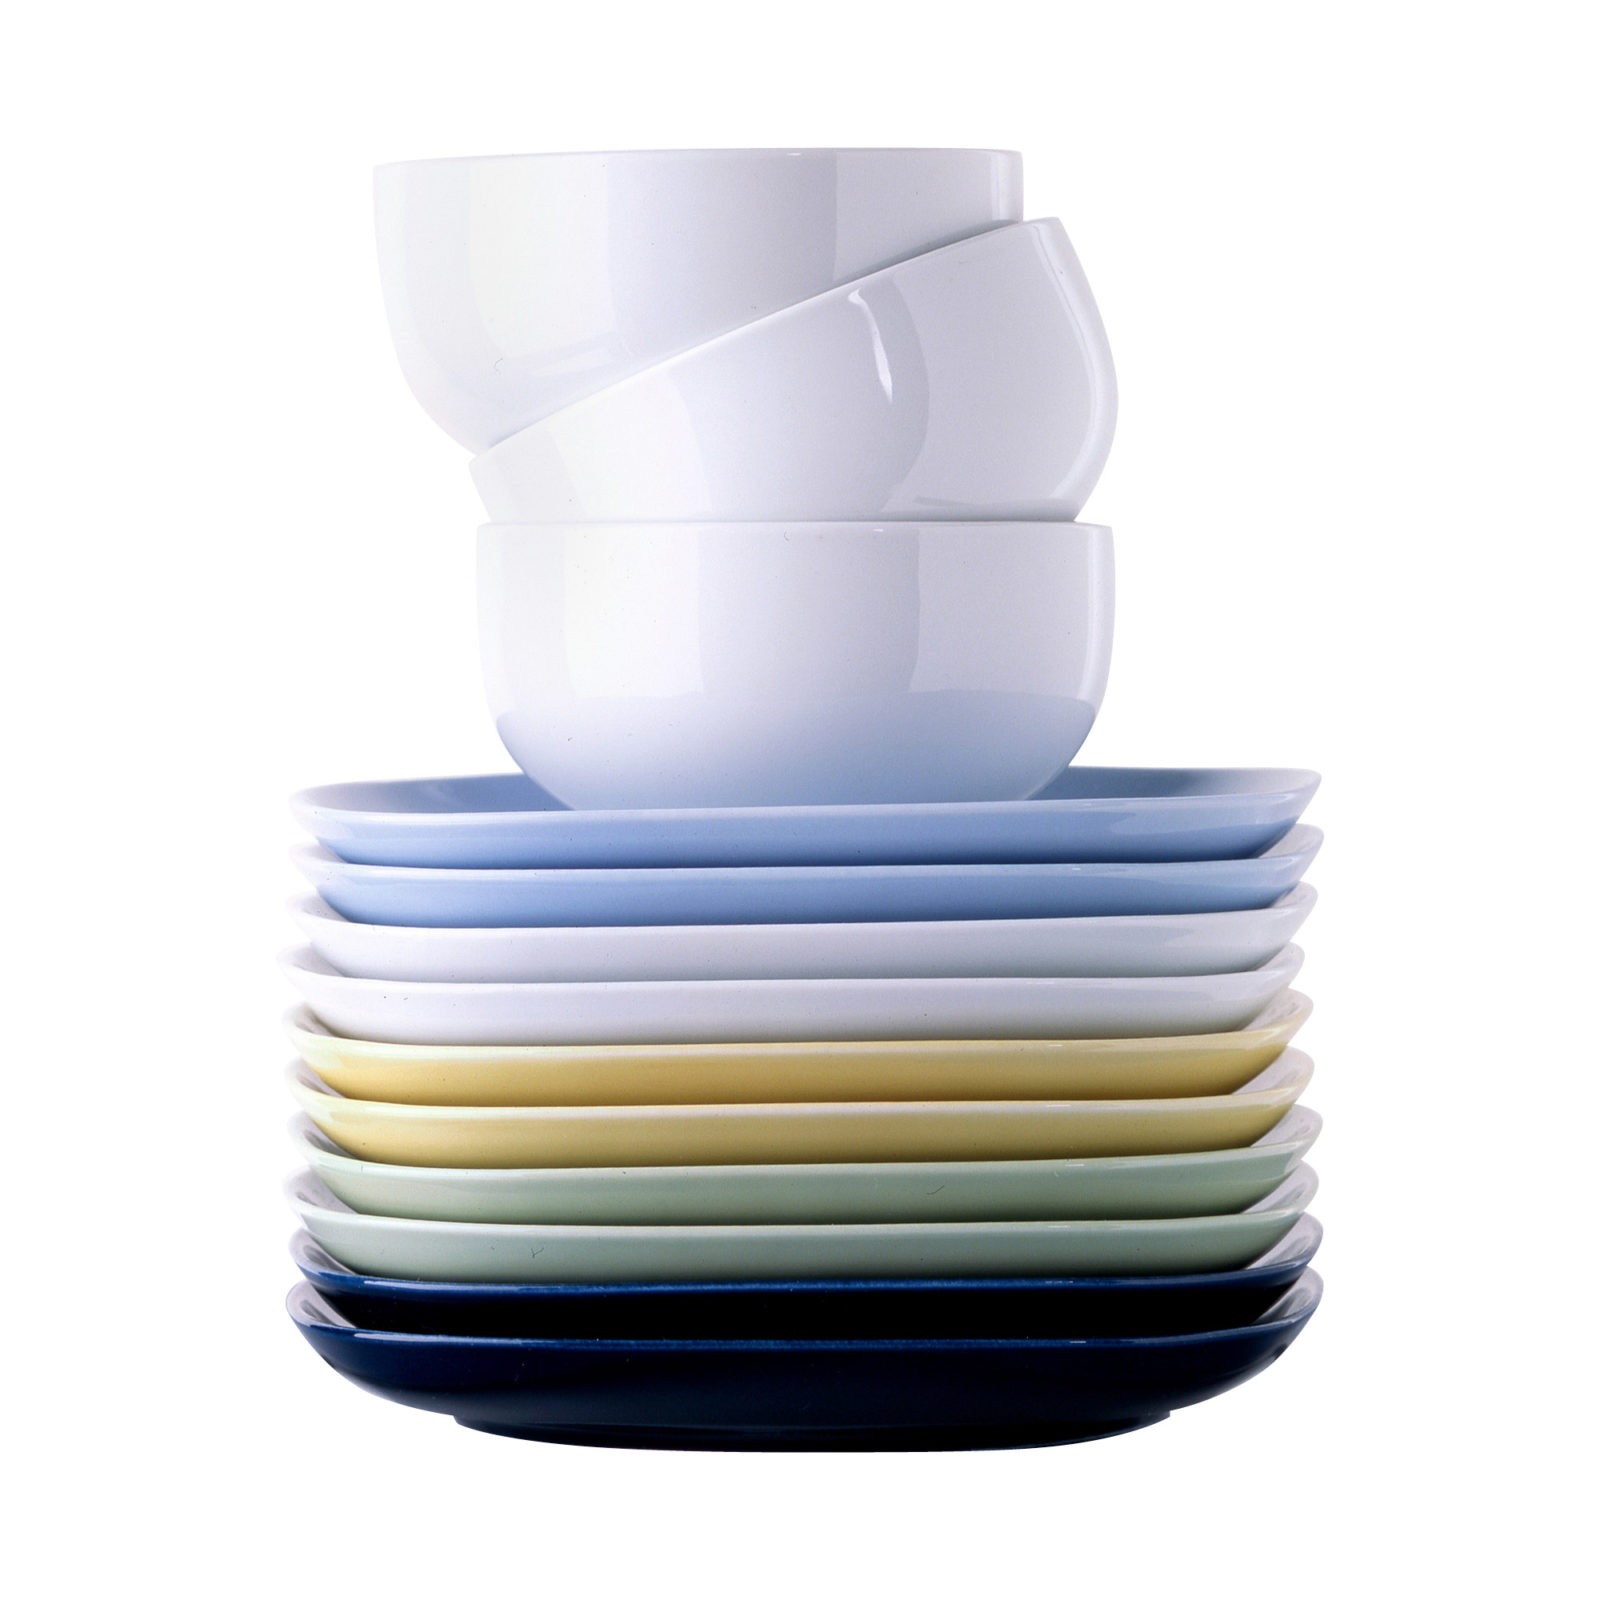 IKEA 365+ plates and bowls.